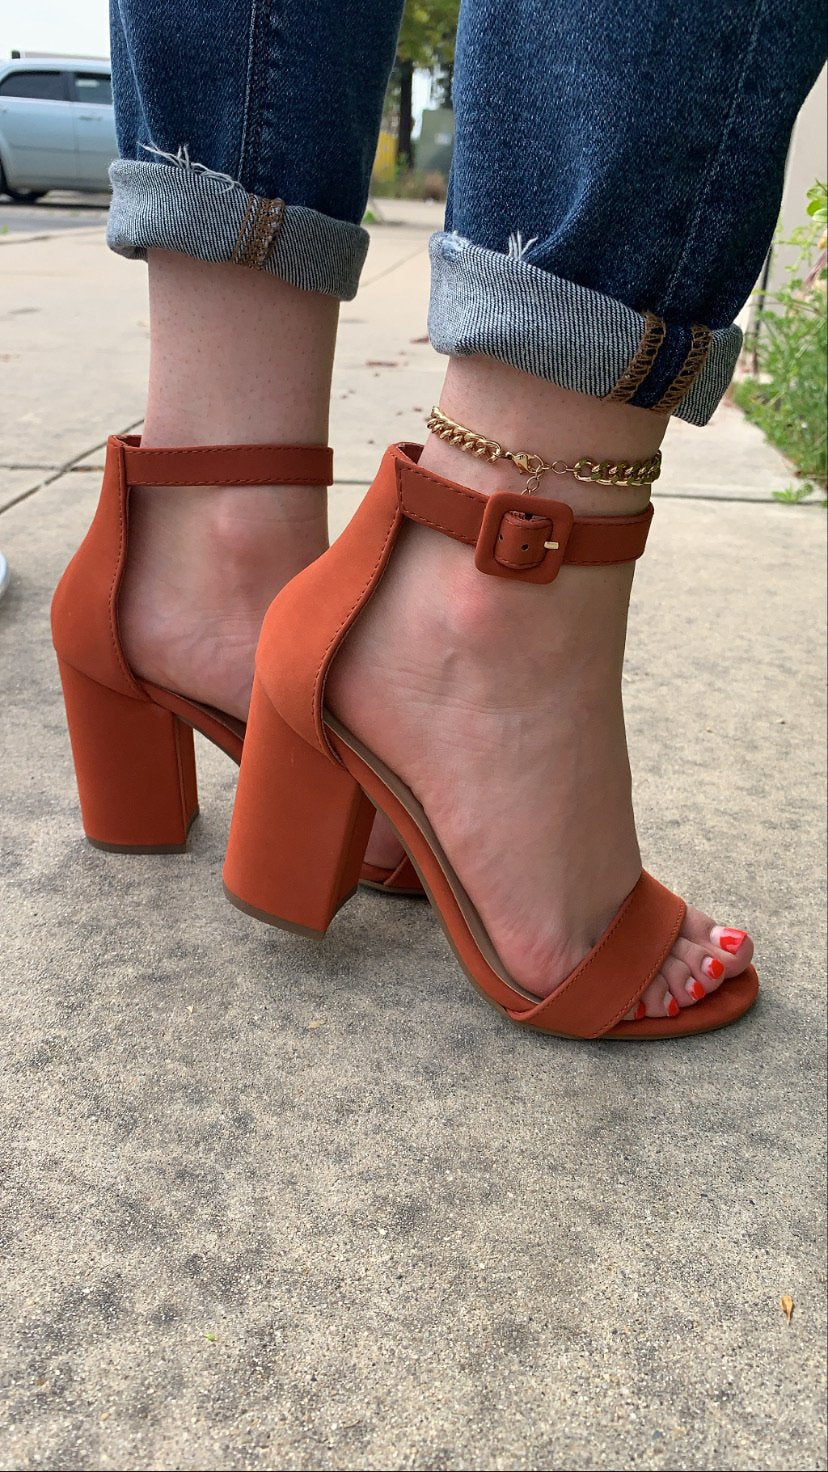 Choice heels